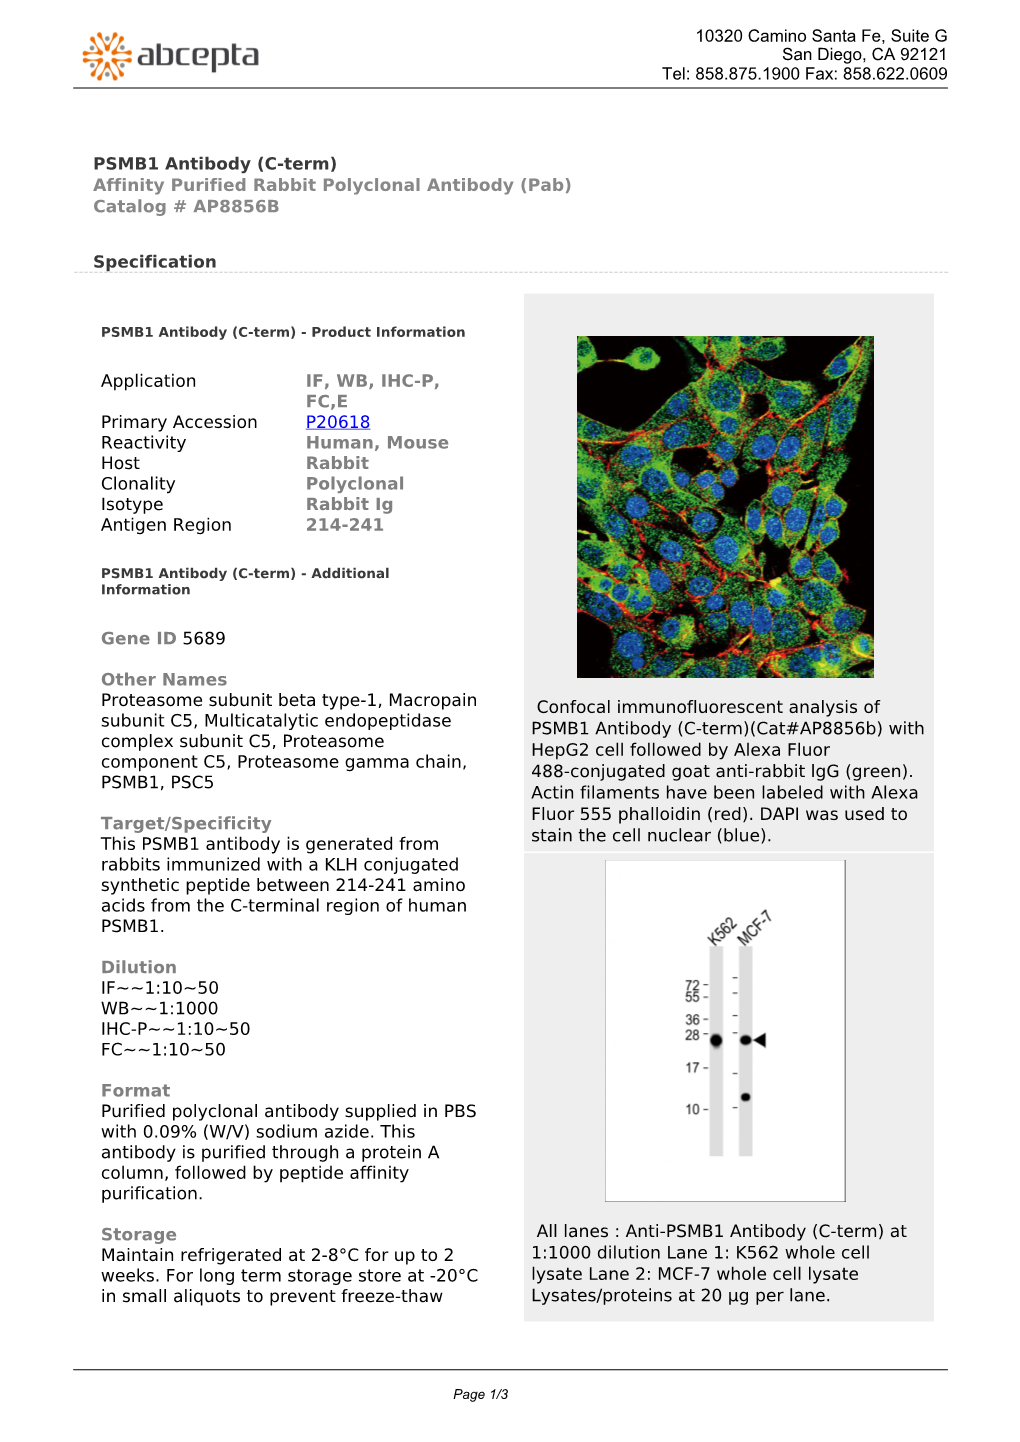 PSMB1 Antibody (C-Term) Affinity Purified Rabbit Polyclonal Antibody (Pab) Catalog # AP8856B